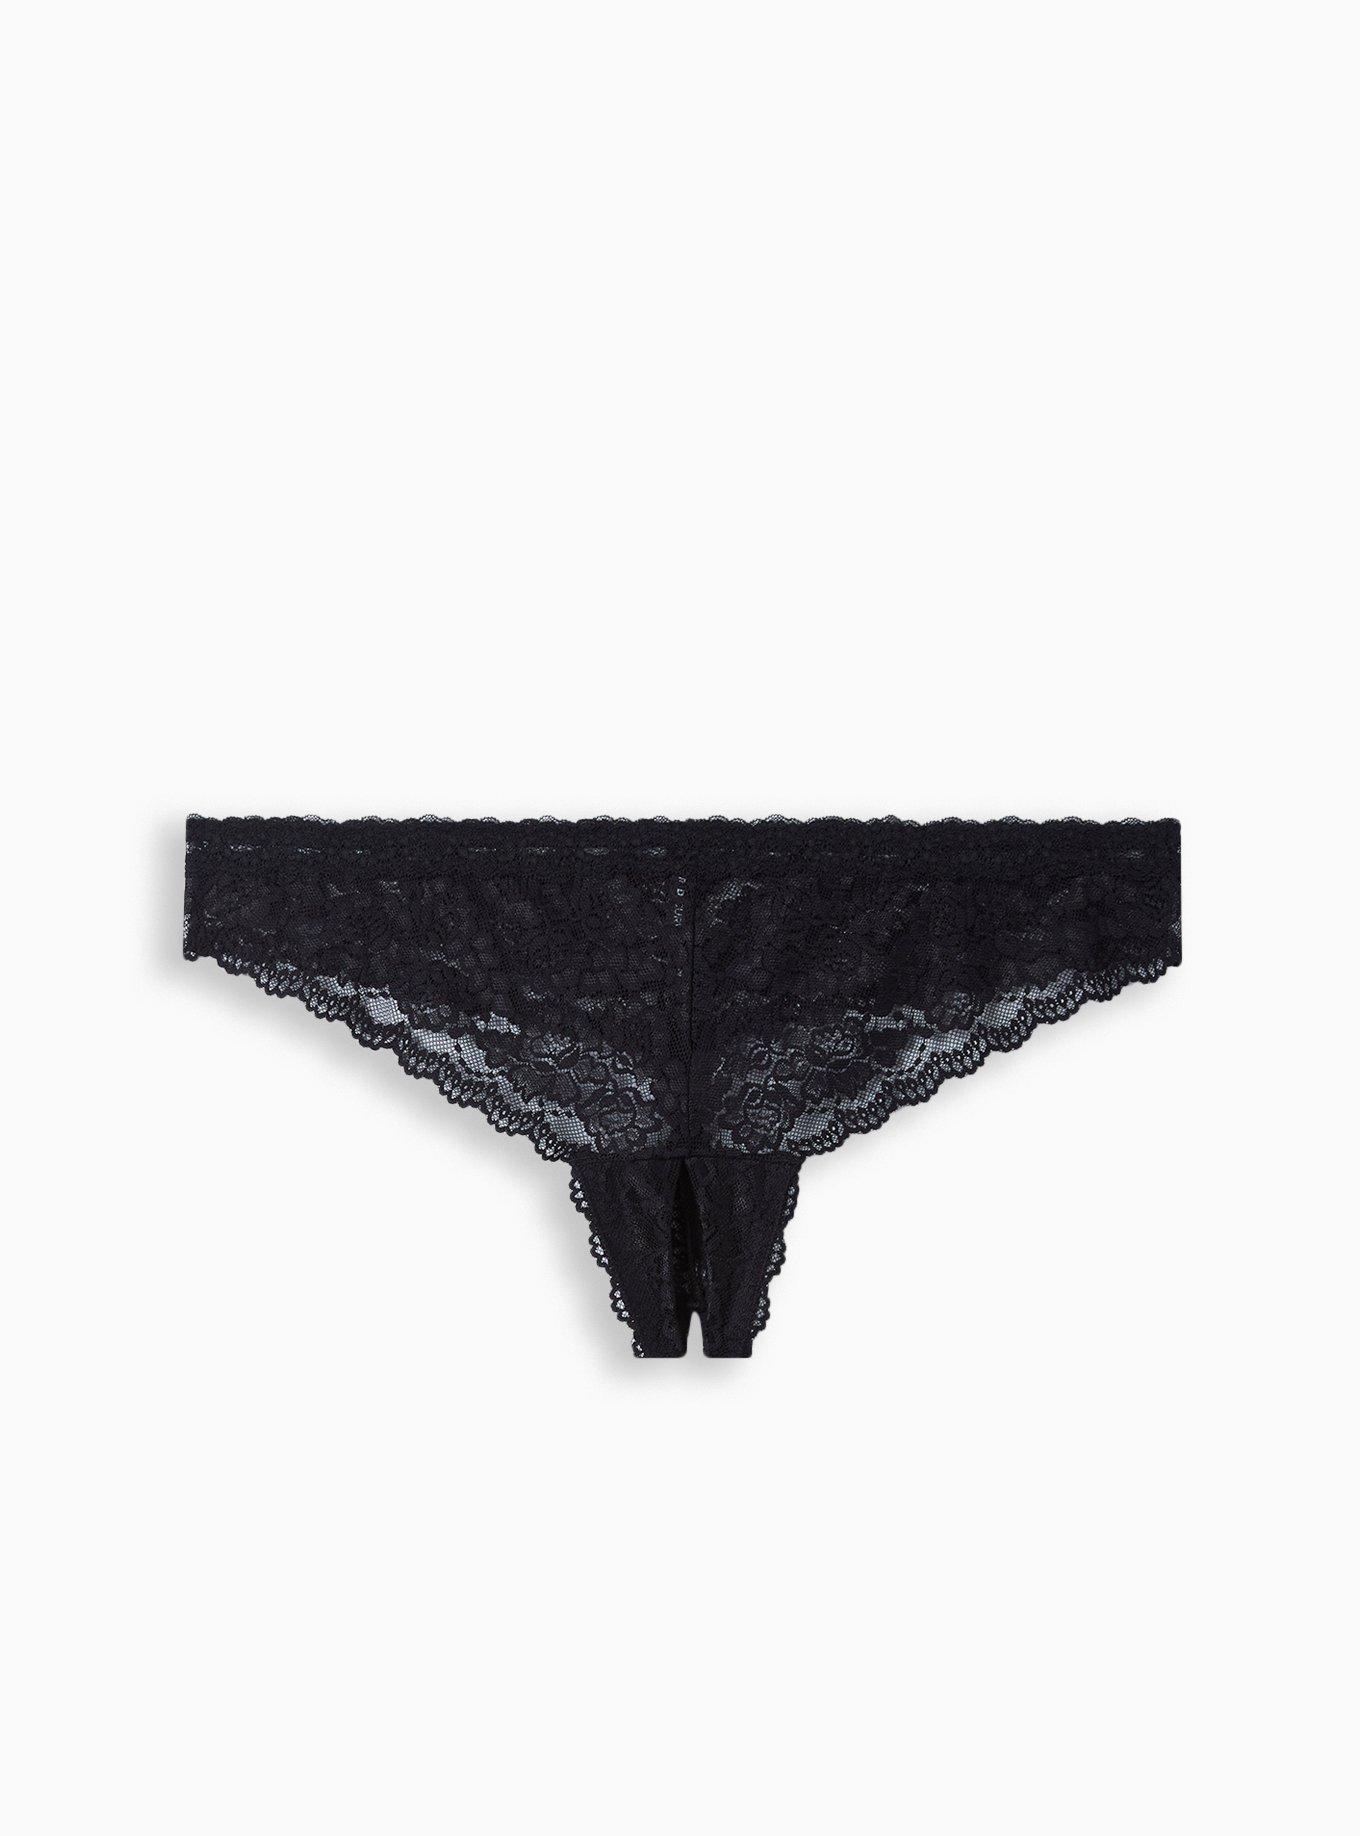 Torrid Black High Waist Cutout Back Lace Thong Panty Plus Size 2X, 18/20